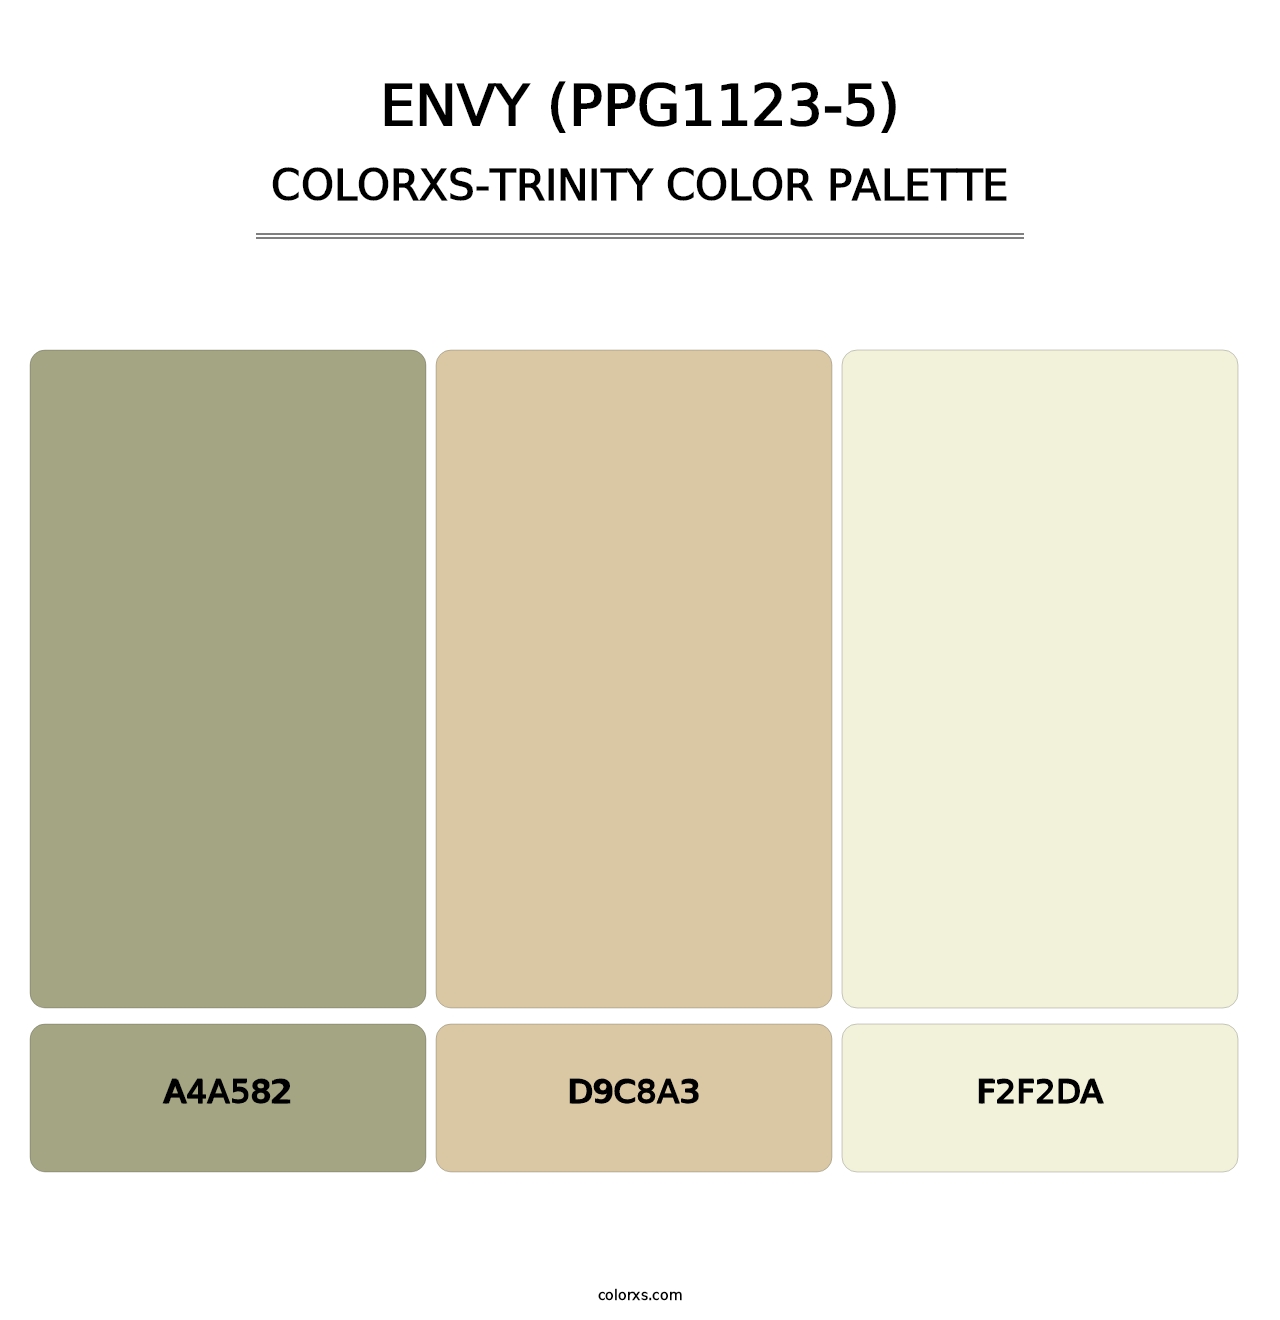 Envy (PPG1123-5) - Colorxs Trinity Palette